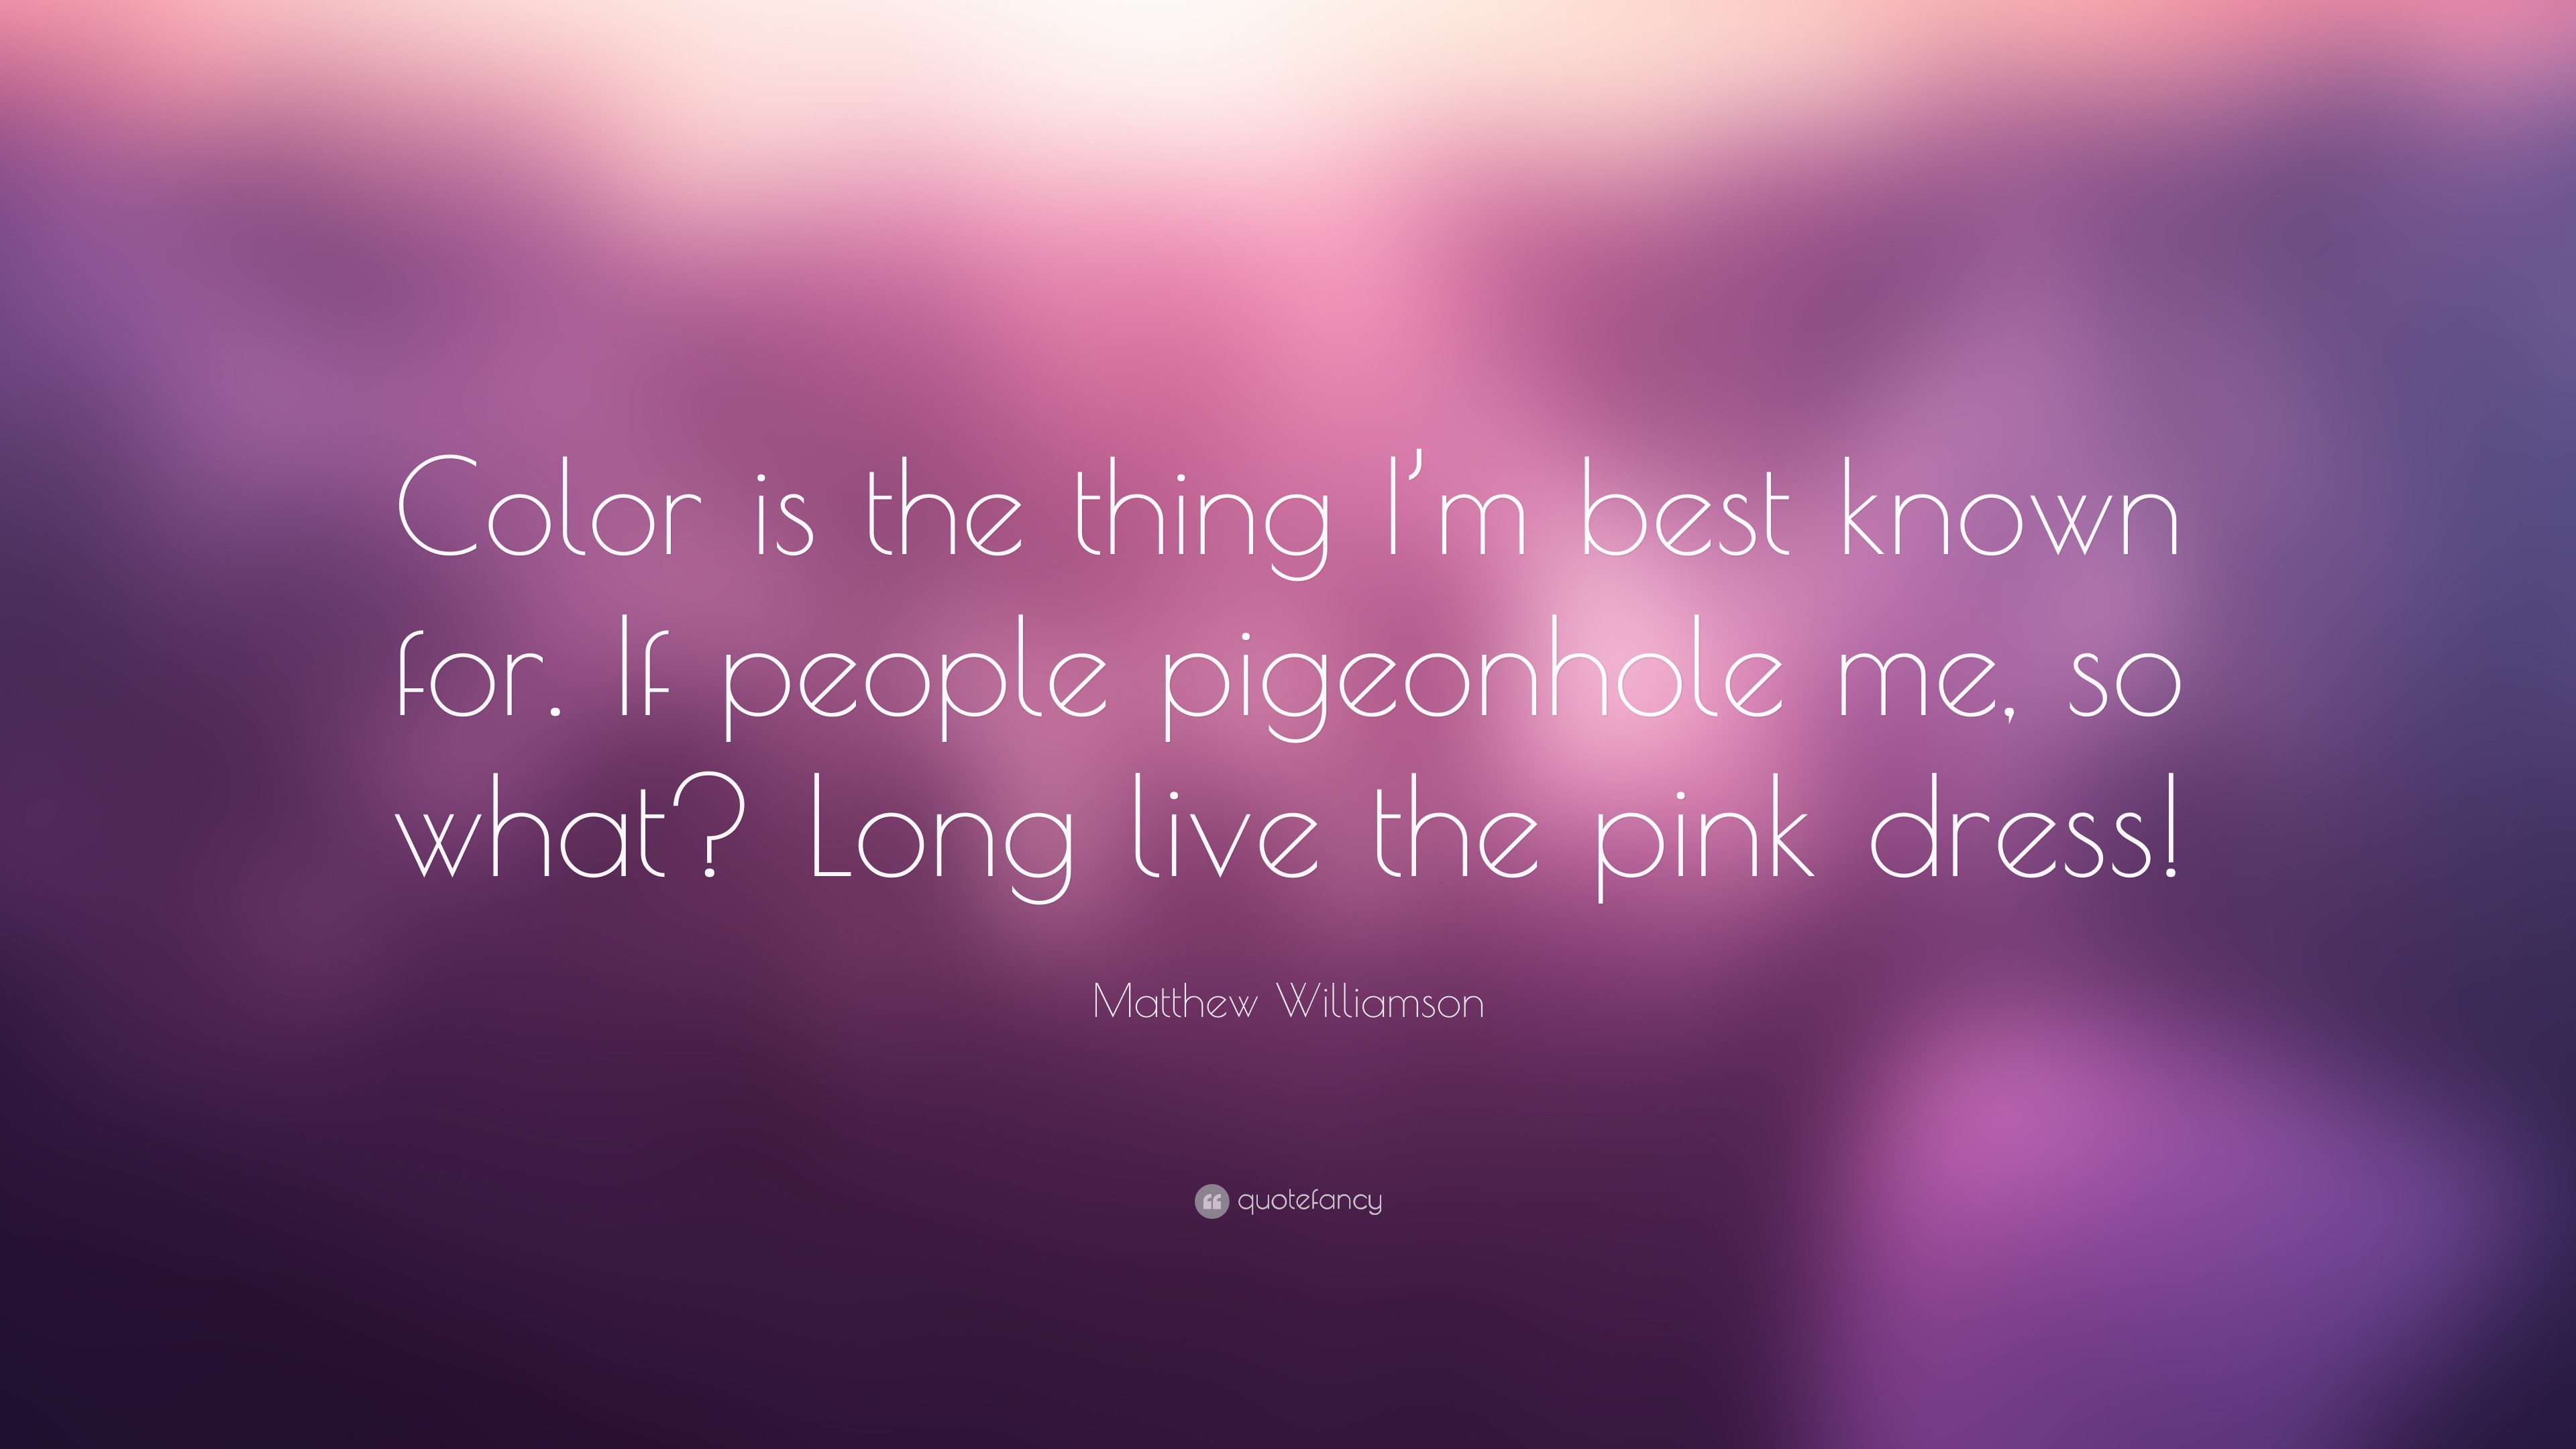 Clarity is power and focus is magic.” ~ ACB #originalquote #quotes  #pinkflowerydress #pinkdress #vivaglam | Instagram